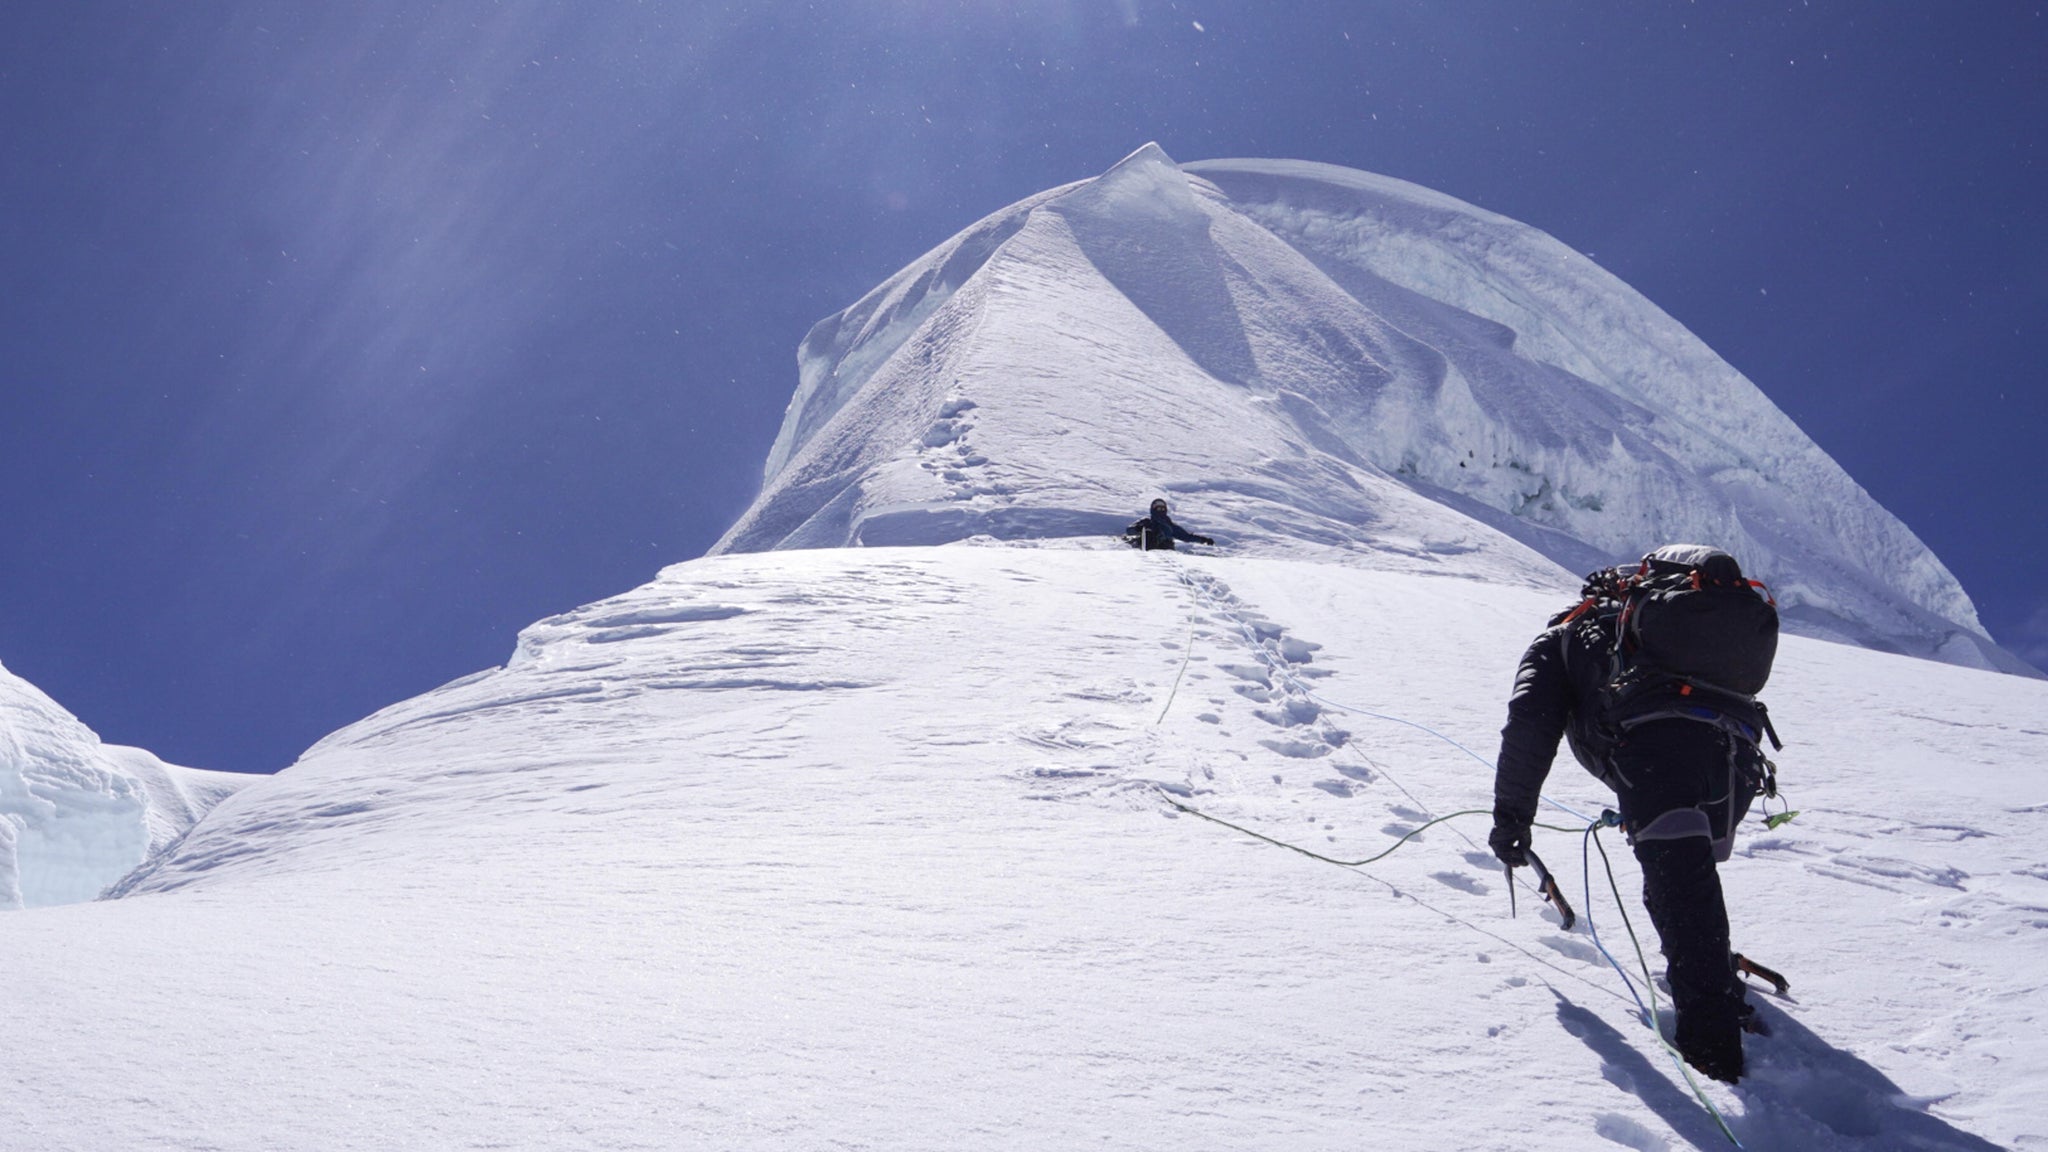 The summit of Tocllaraju in the Cordillera Blanca Peru. Photo: Zeb Blais.